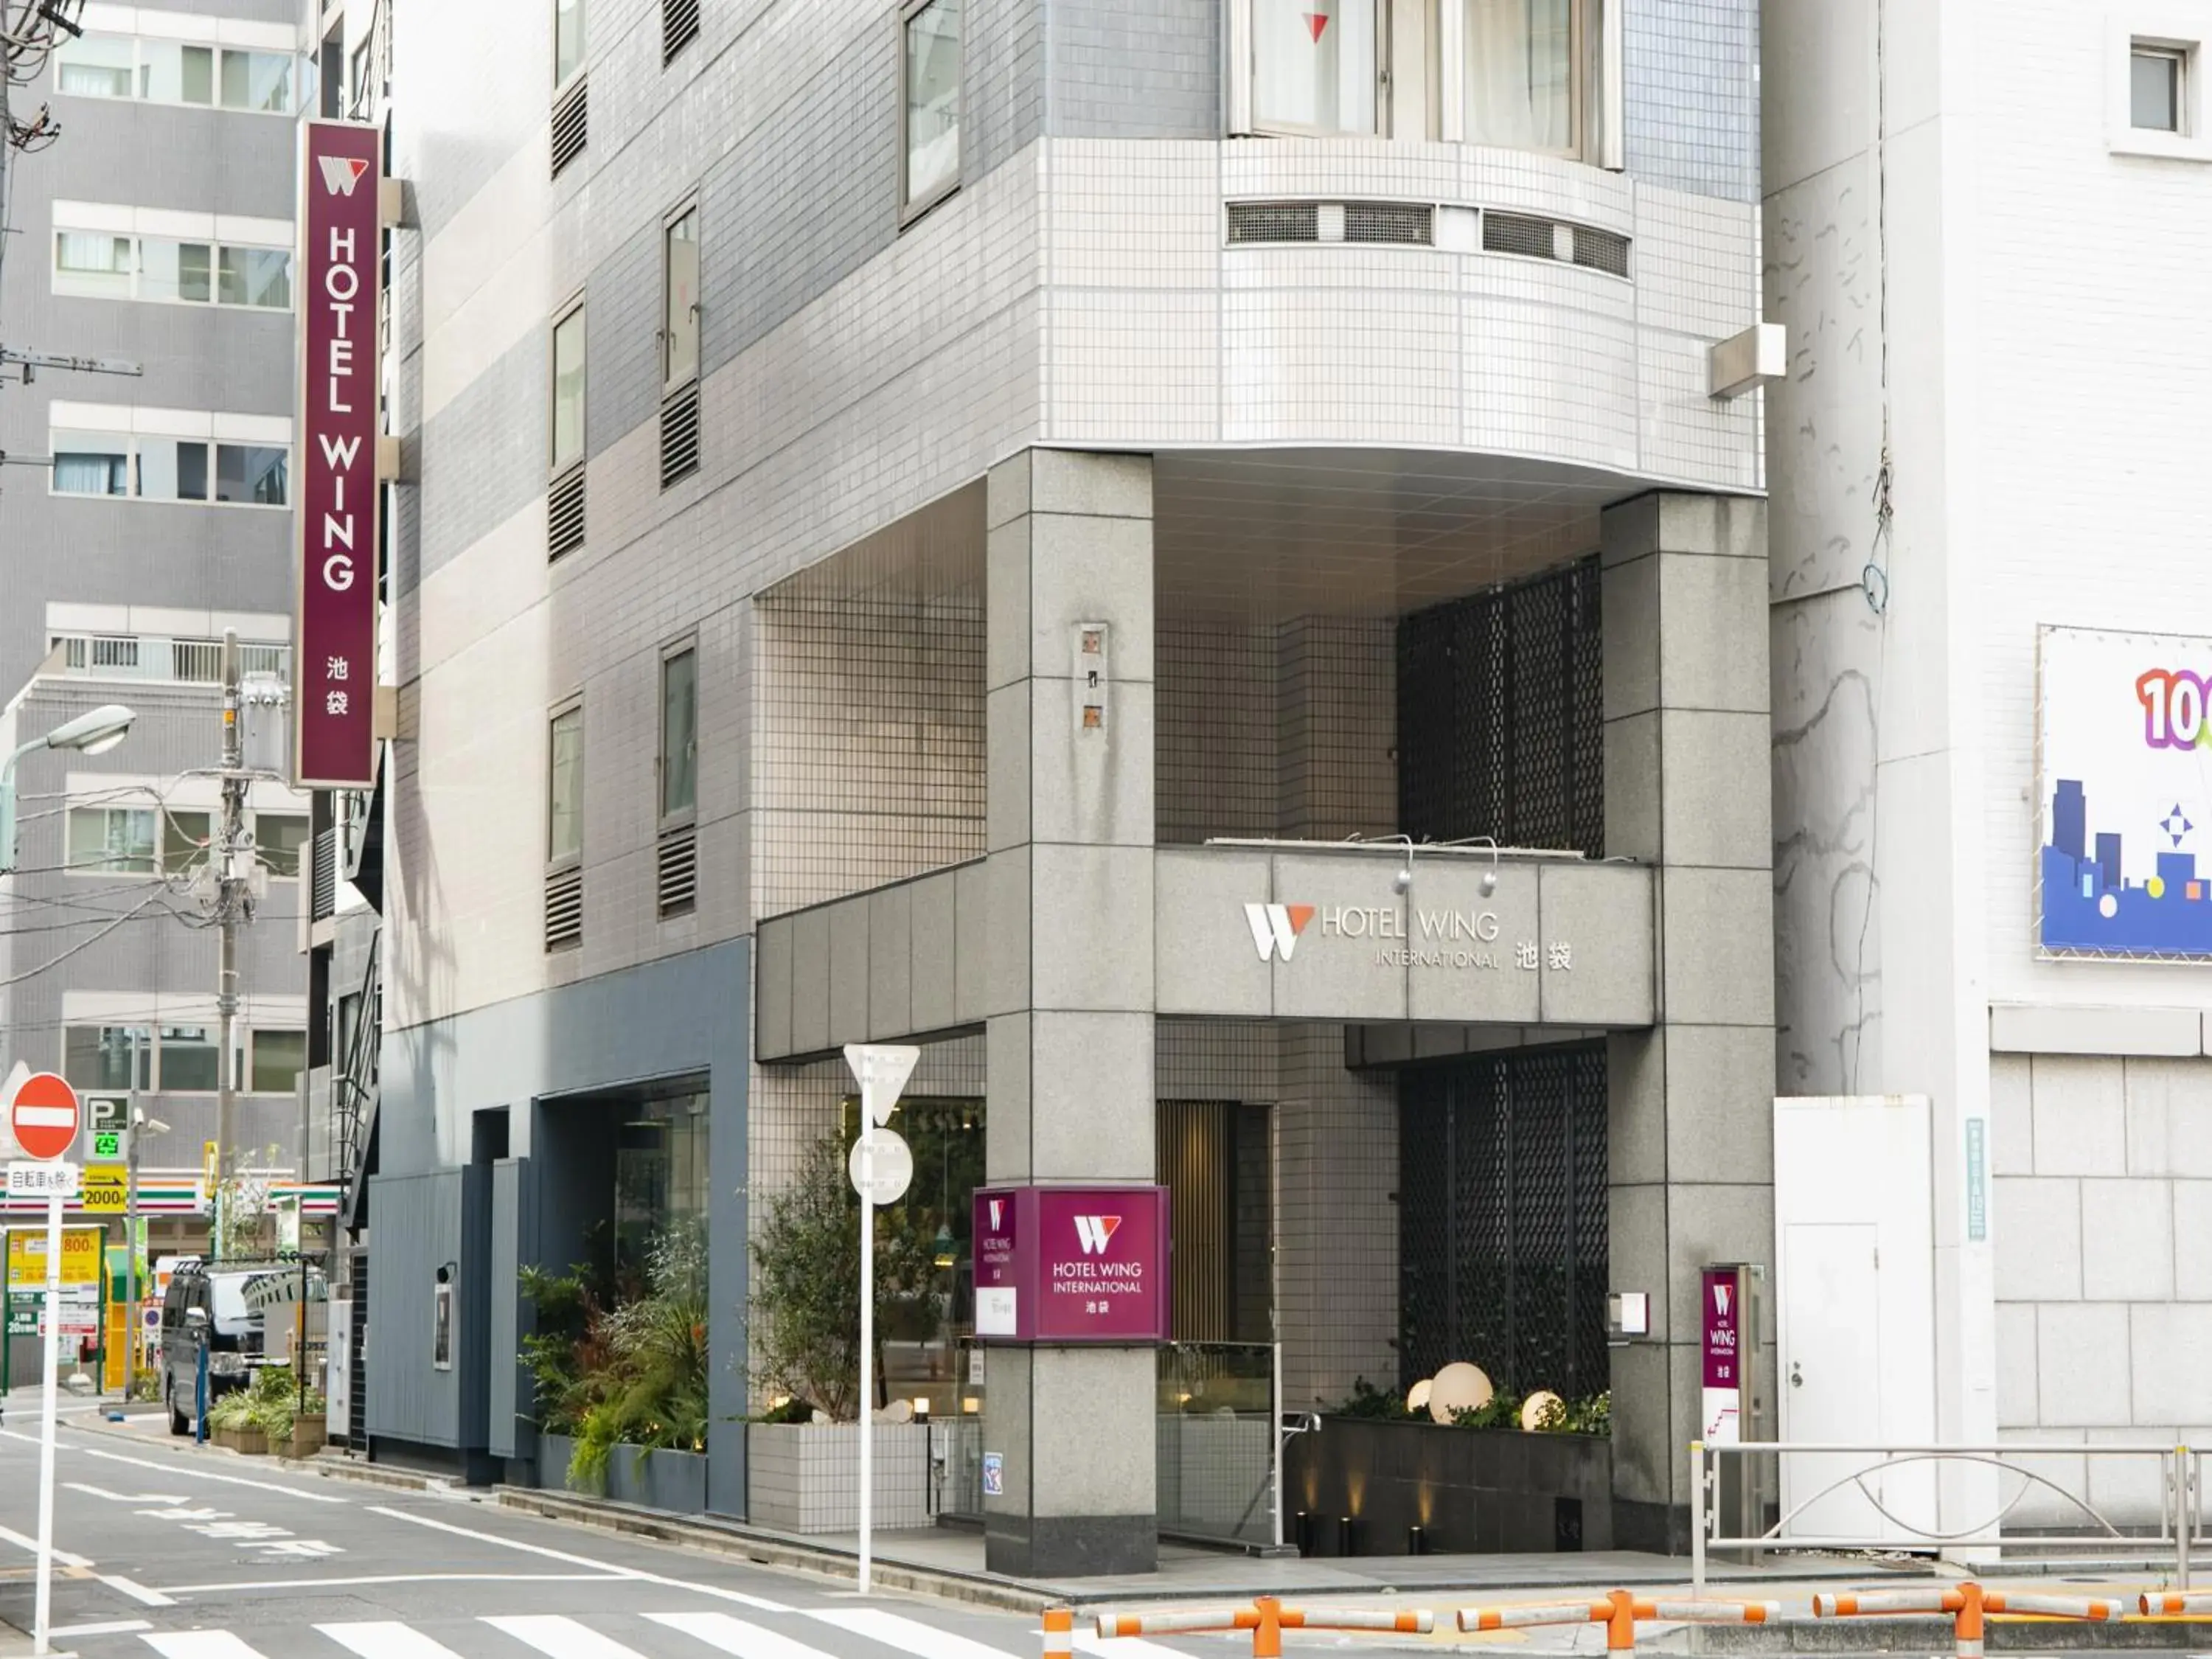 Facade/entrance, Property Building in Hotel Wing International Ikebukuro